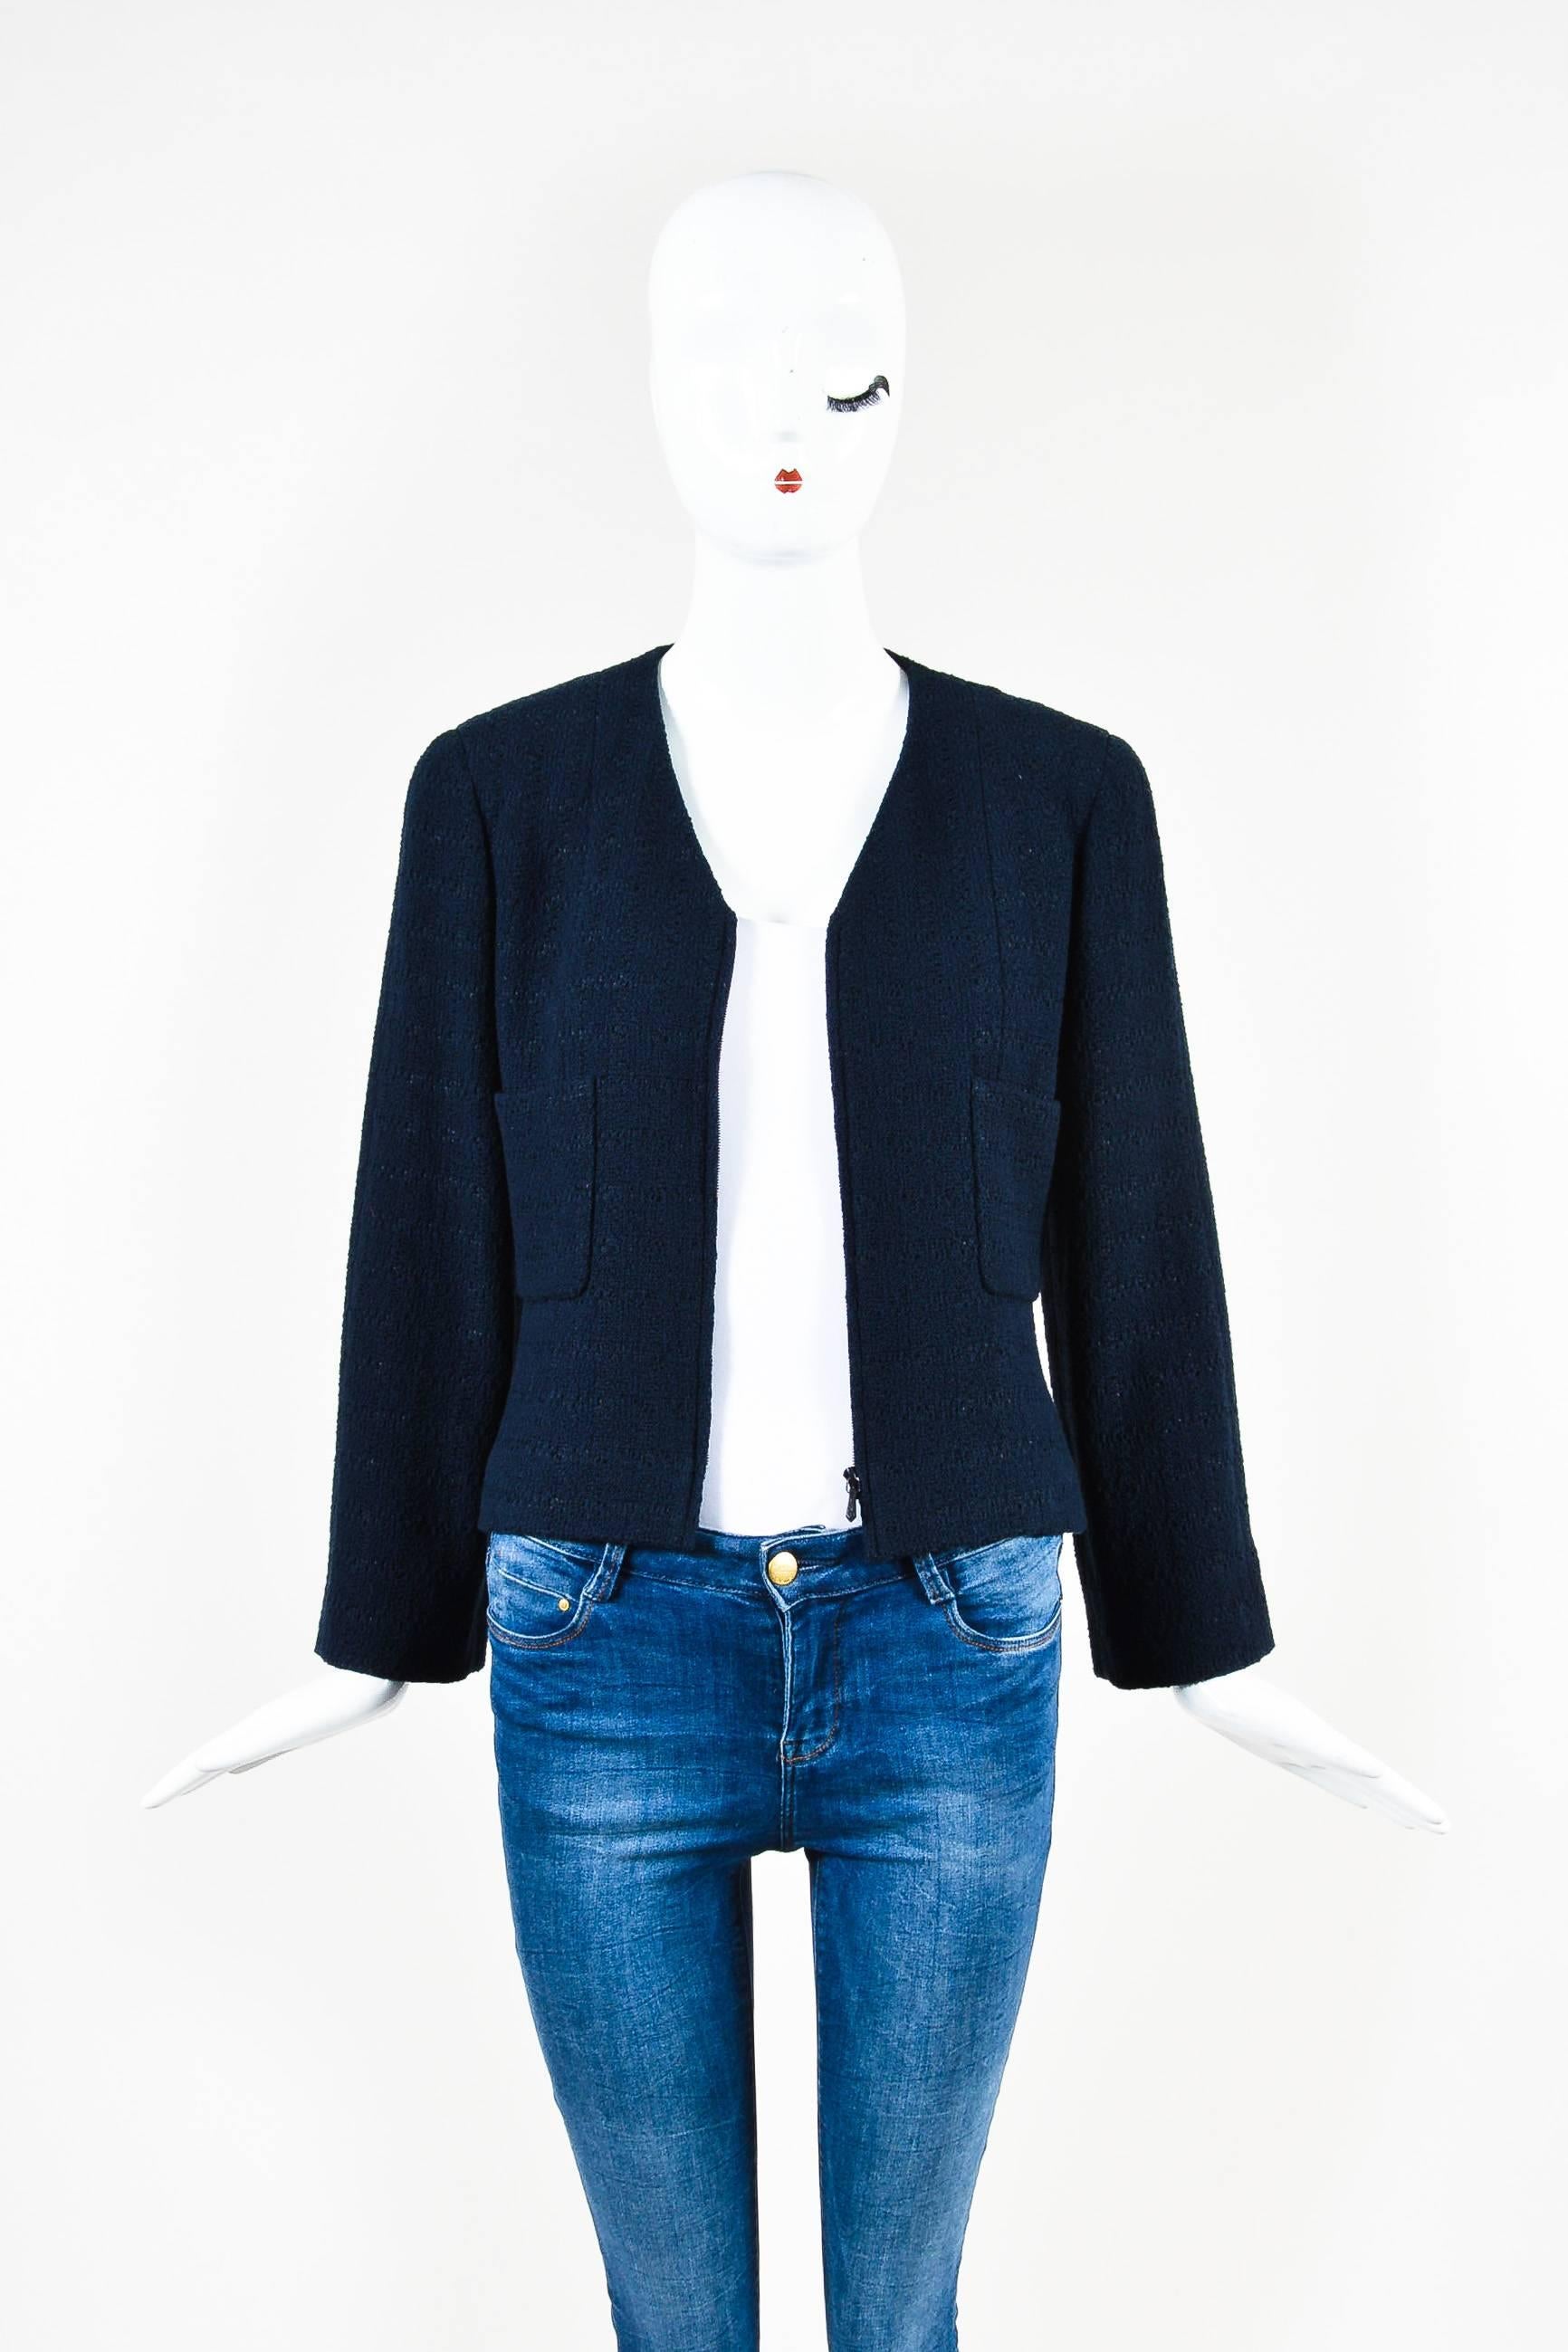 Black Chanel Navy Blue Boucle Tweed Zip Long Sleeve Jacket A Line Skirt Suit Set SZ 40 For Sale